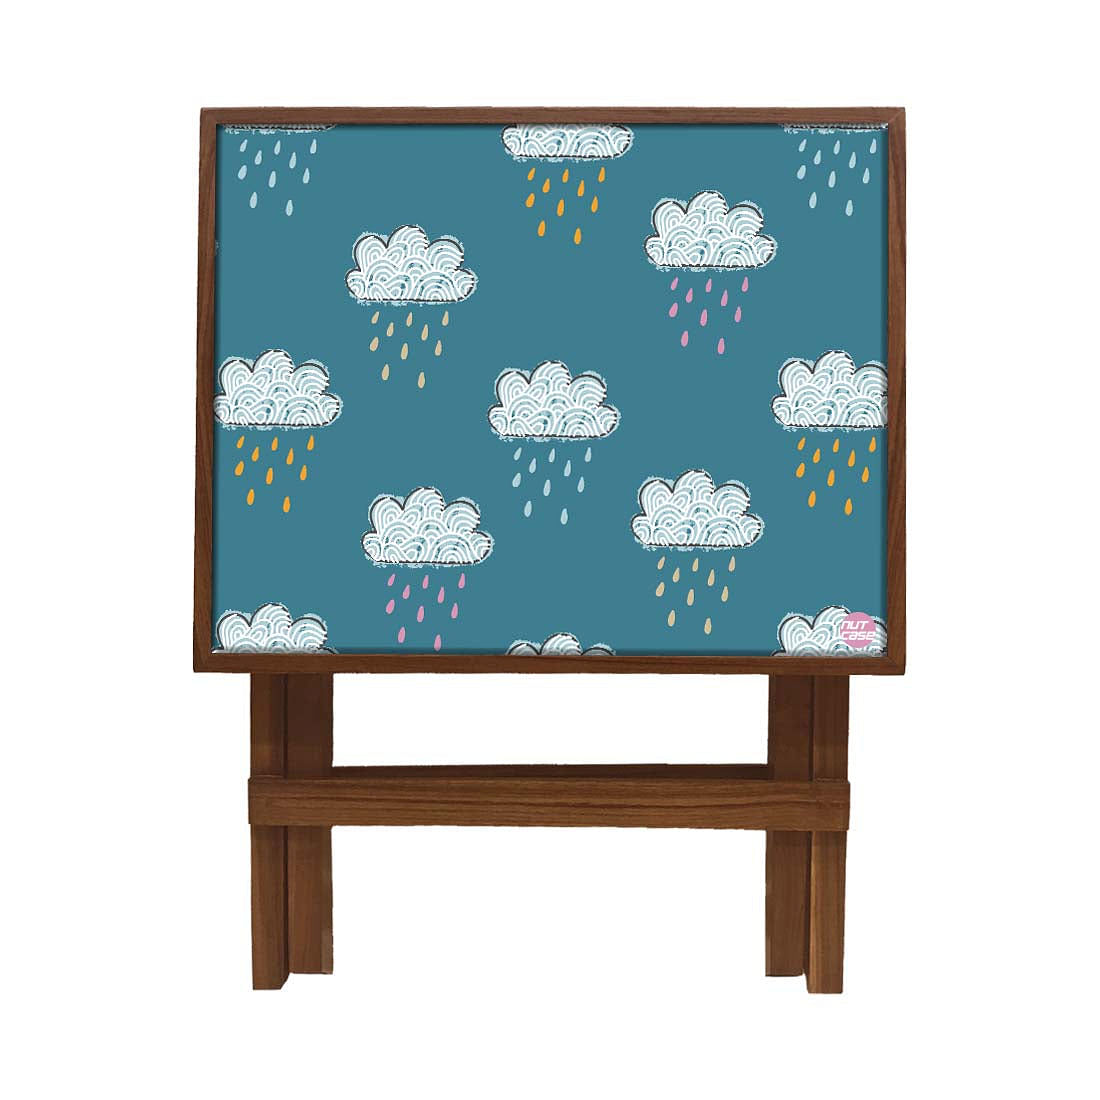 Folding Side Table for Bedroom - Teak Wood - Cloudbarry Nutcase